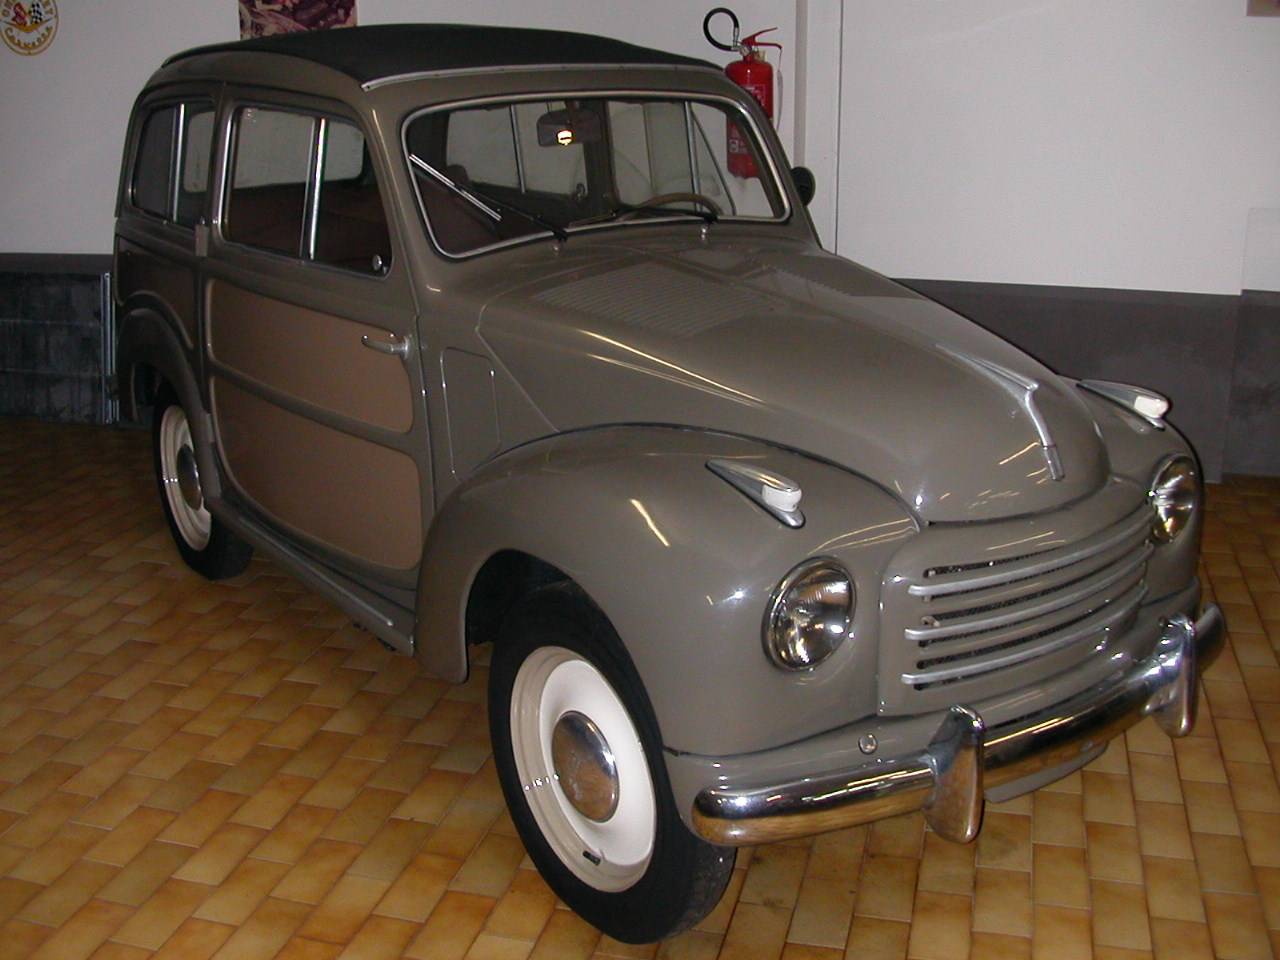 FIAT 500 C Belvedere